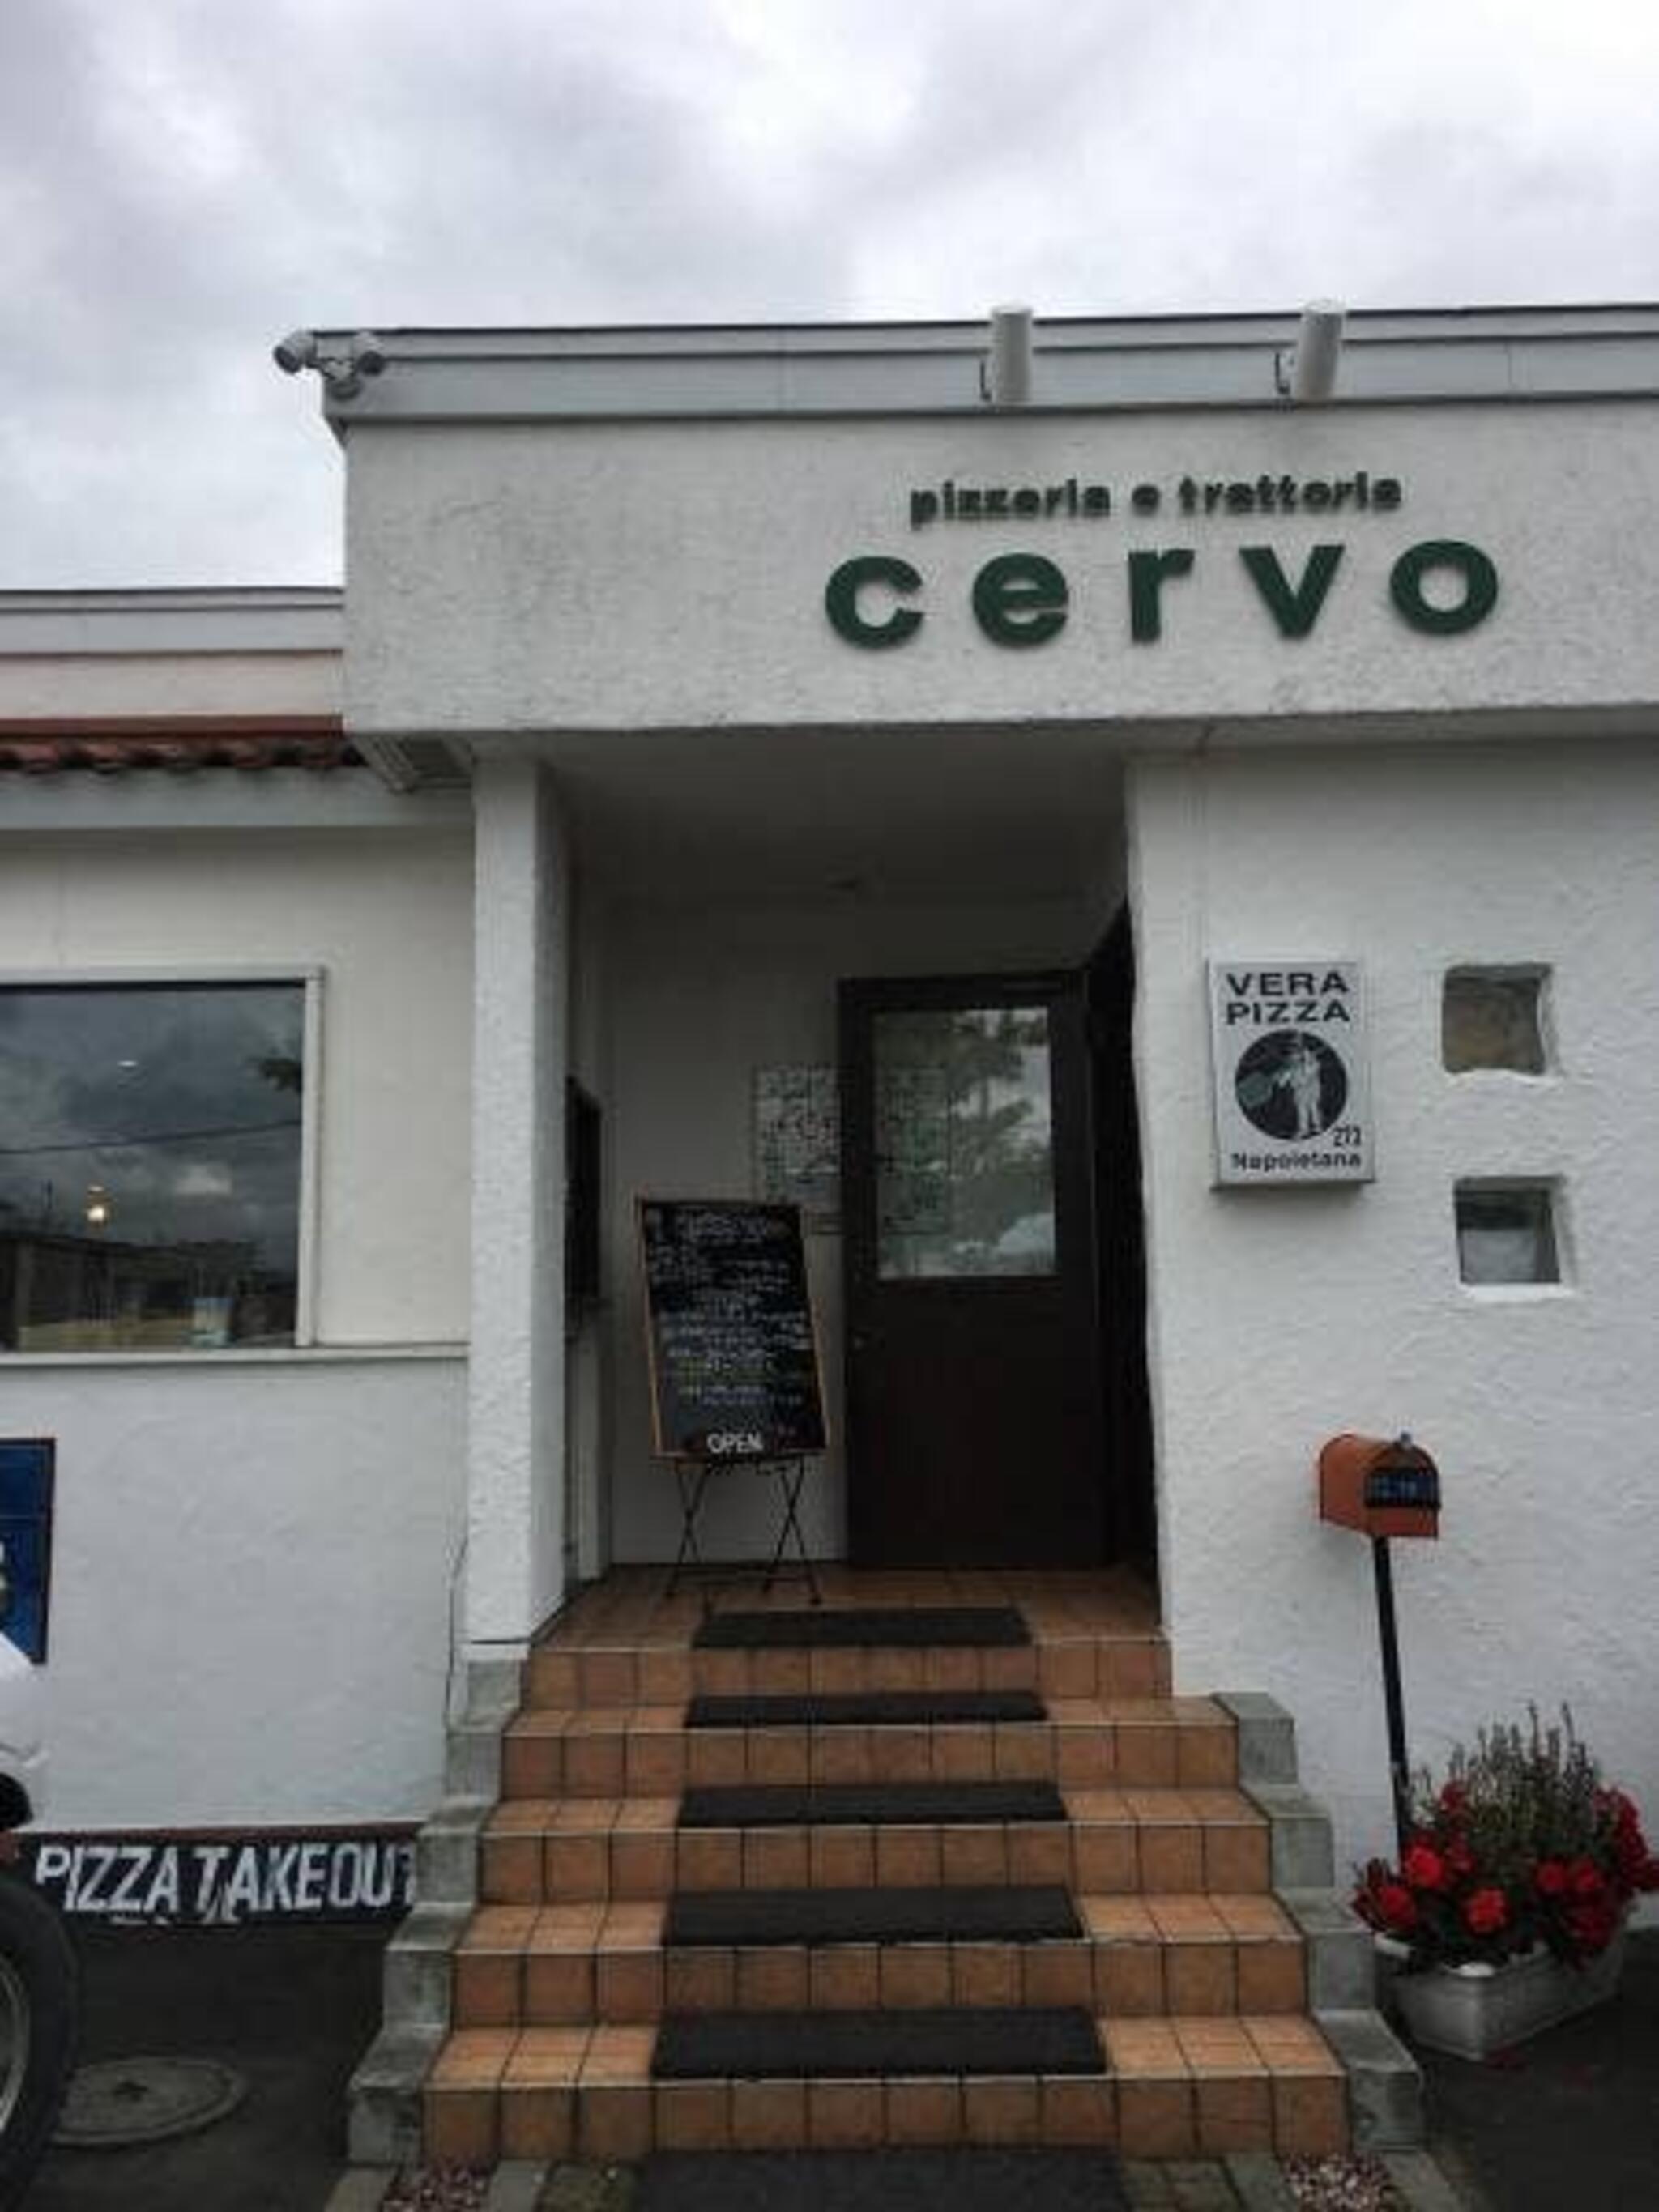 Pizzeria e trattoria CERVOの代表写真10